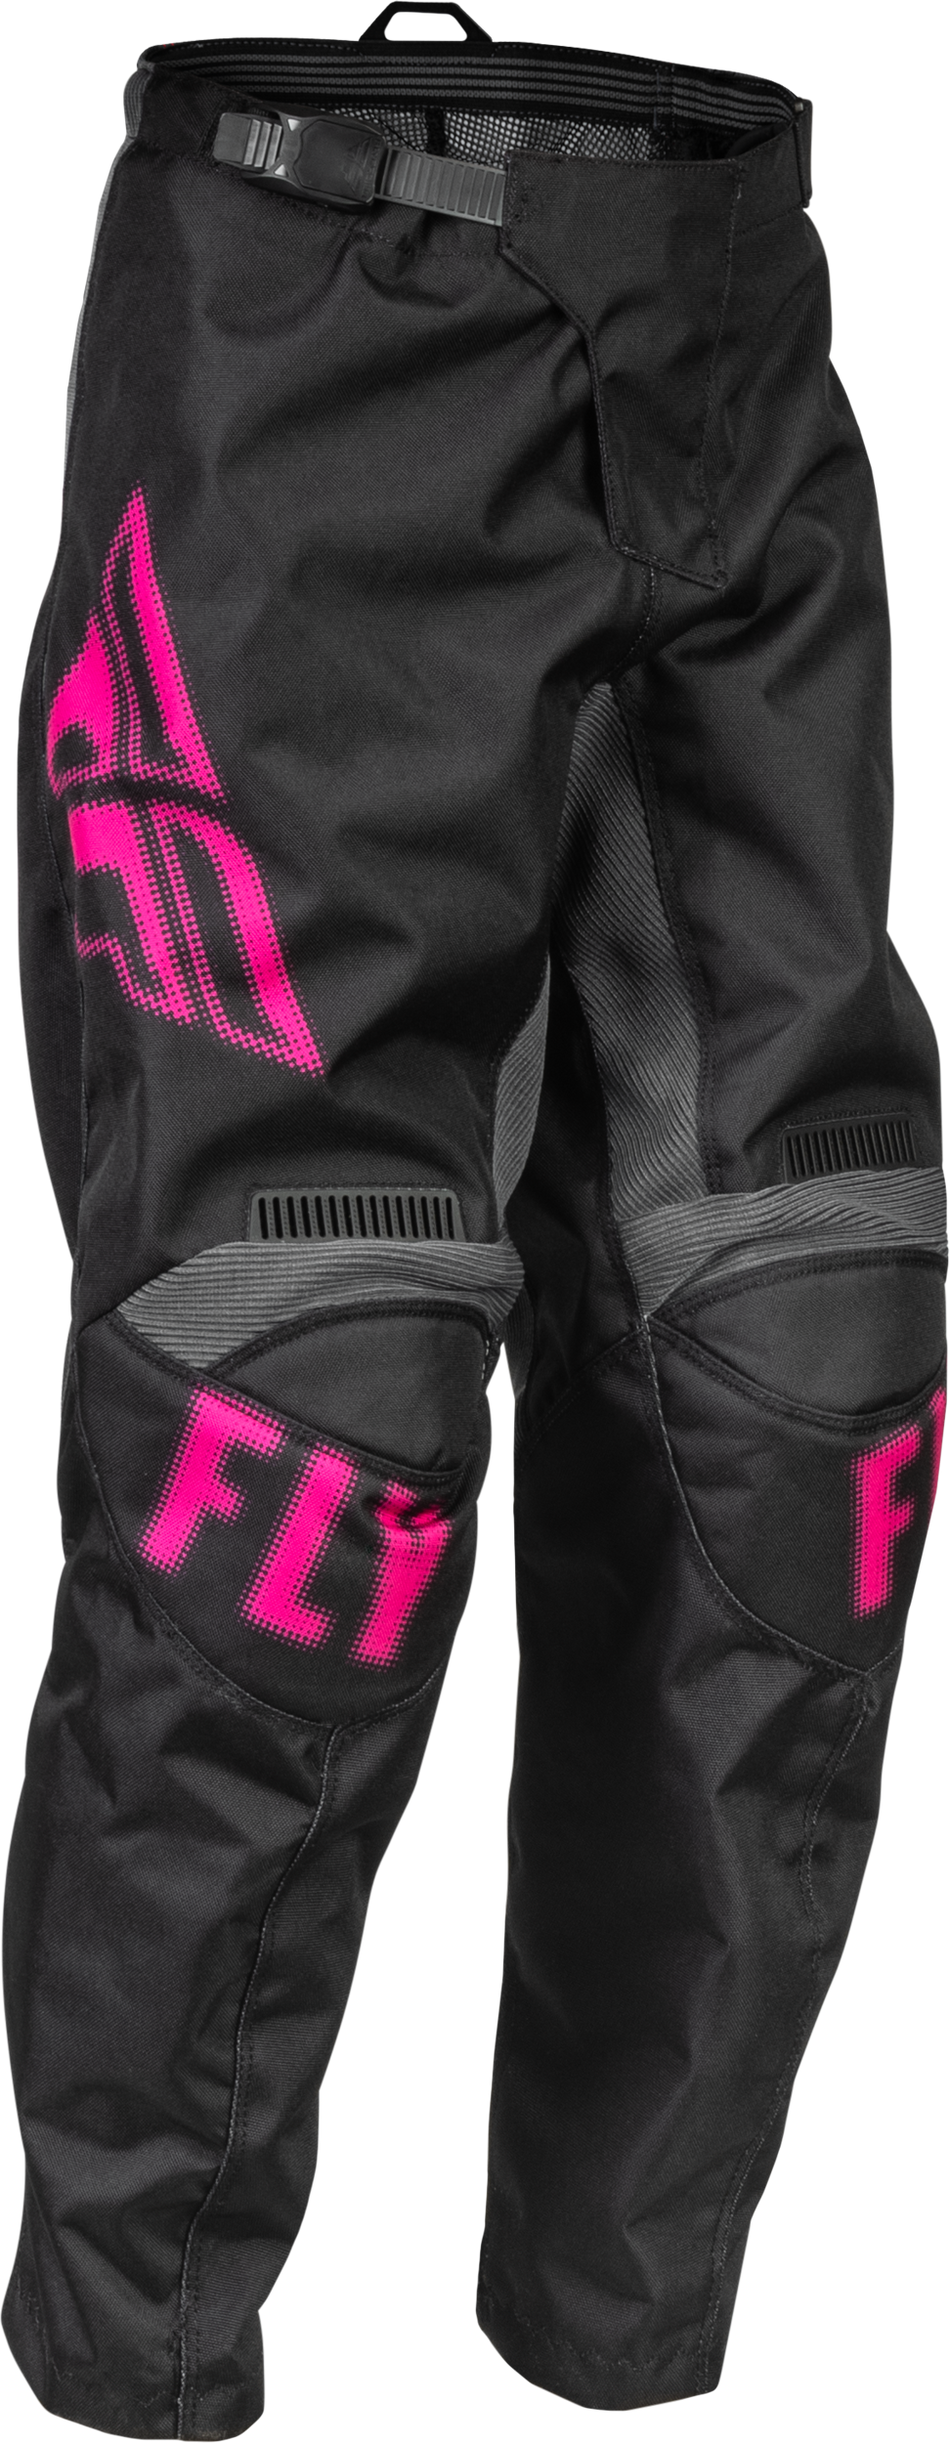 FLY RACING Youth F-16 Pants Black/Pink Sz 24 376-23124